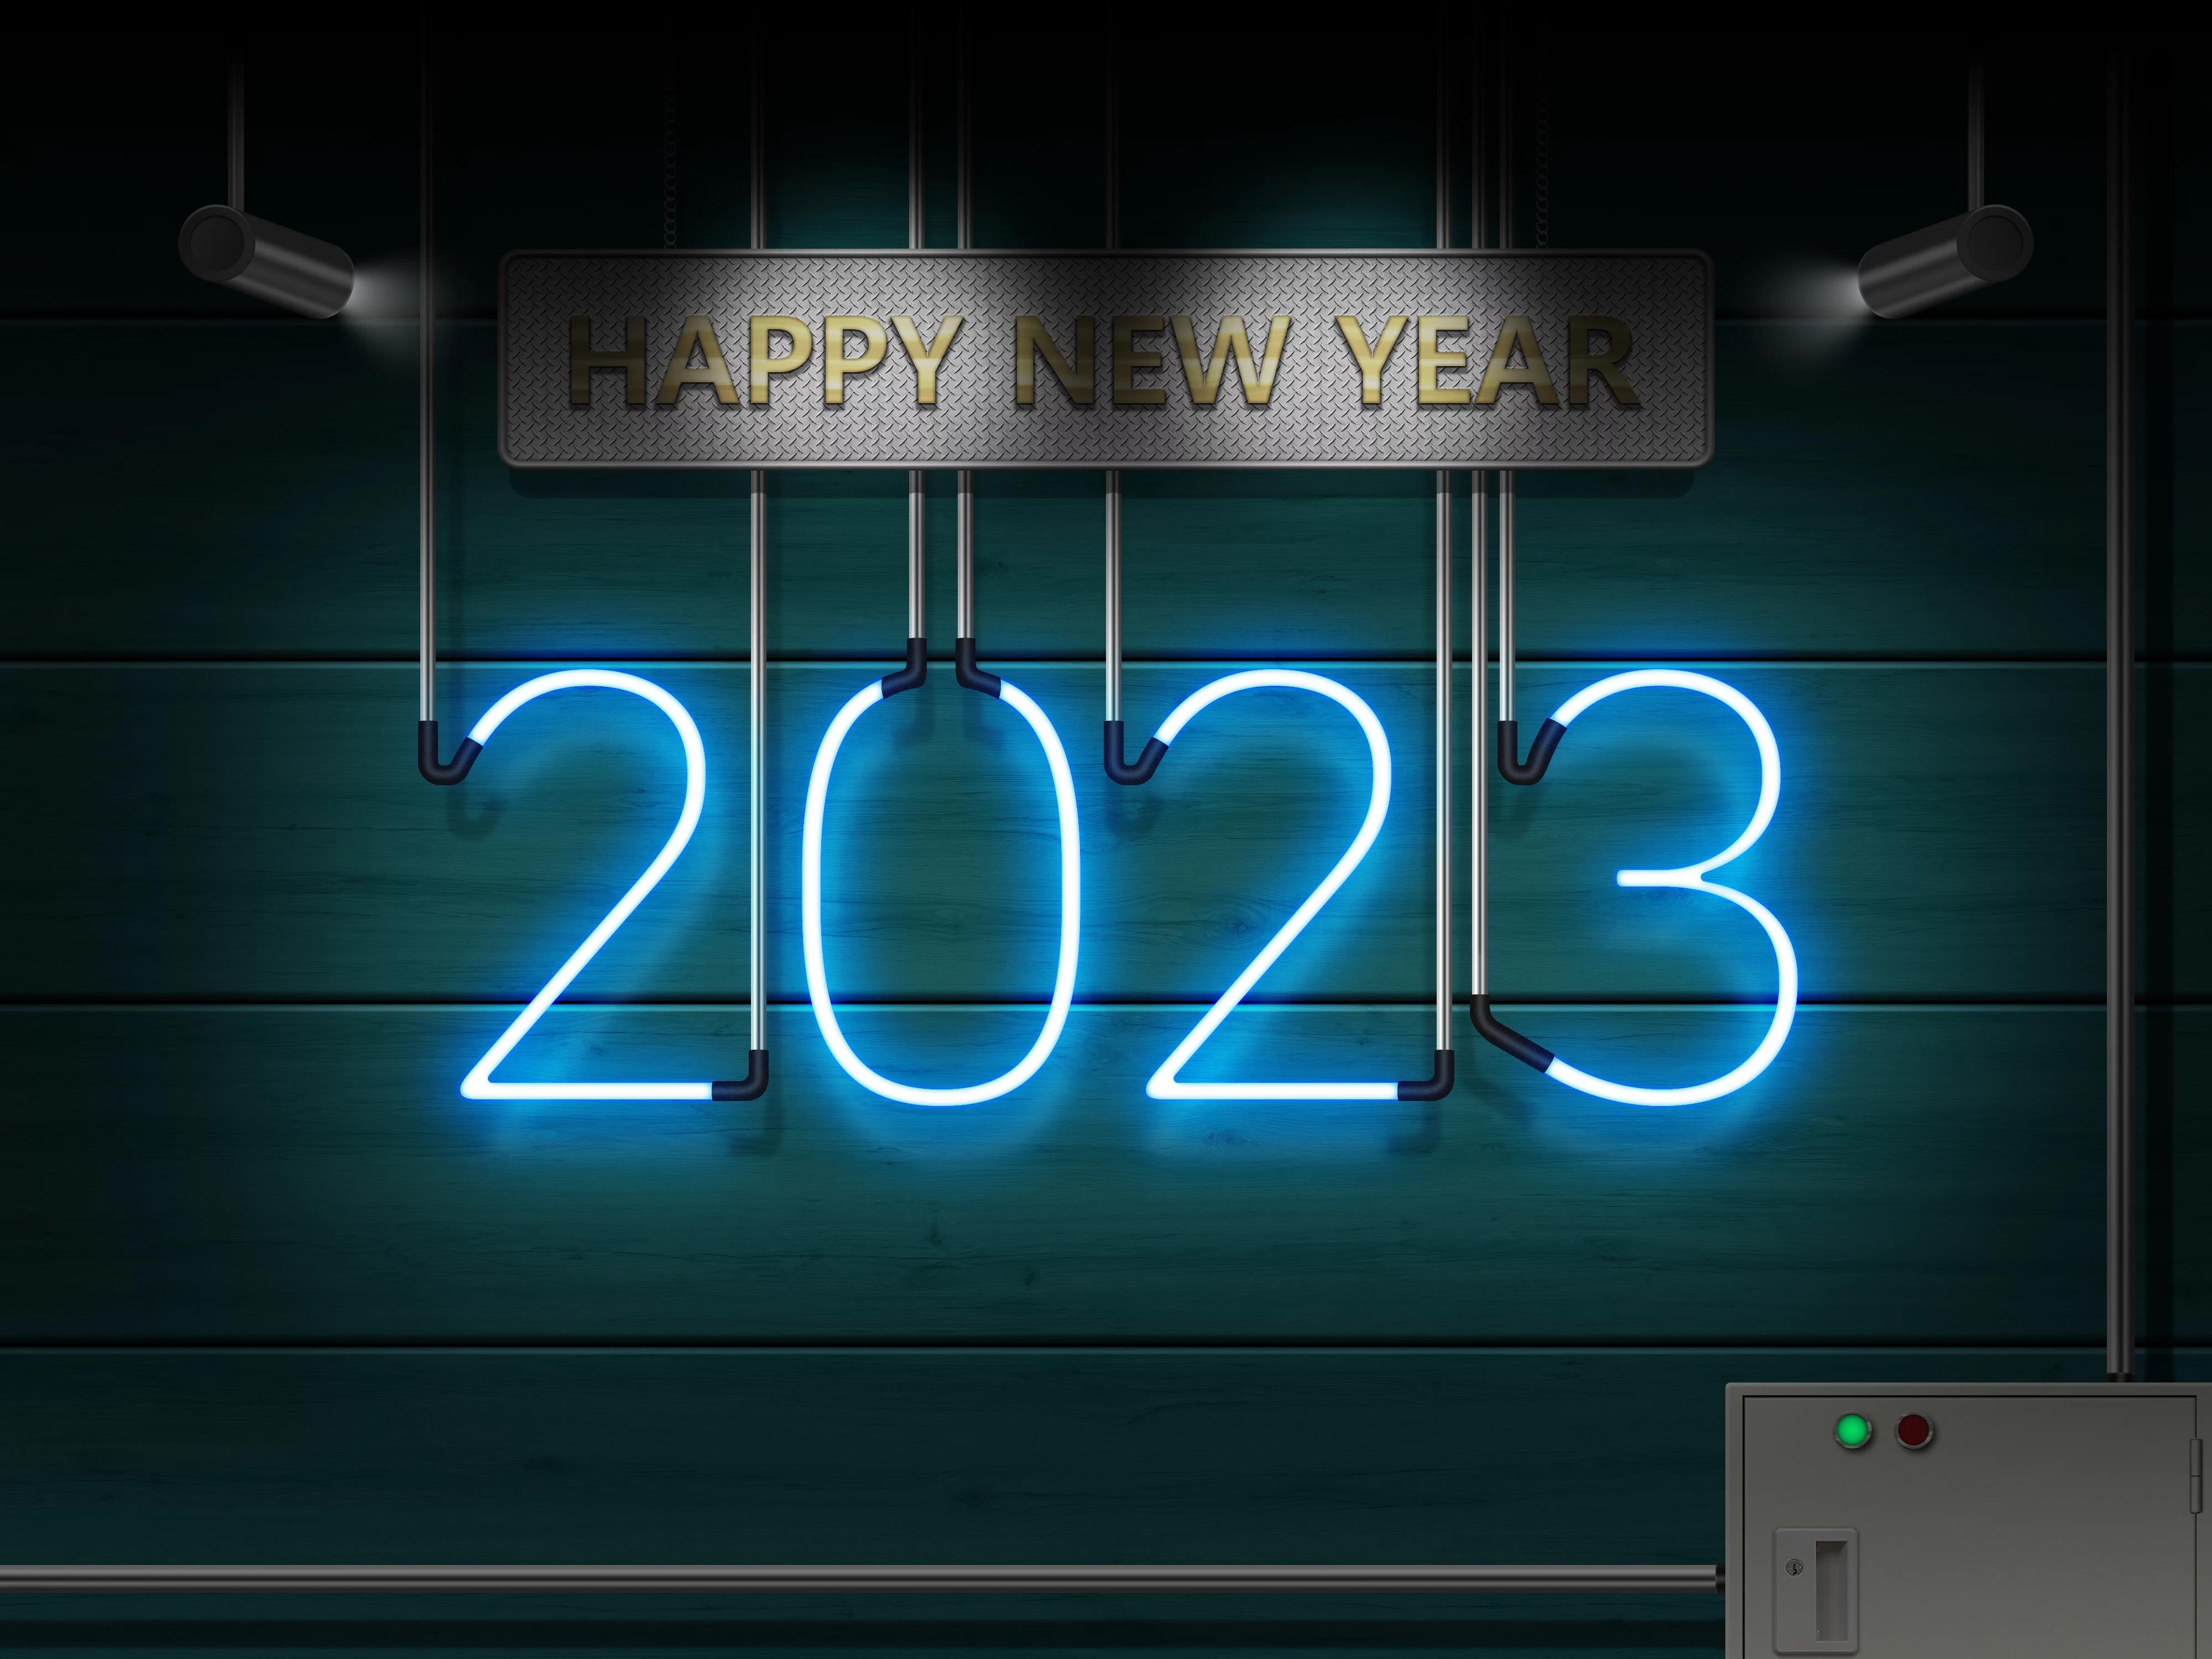 Happy New Year 2023 4k Ultra HD Wallpaper For Desktop PC [Beautiful BG Image]